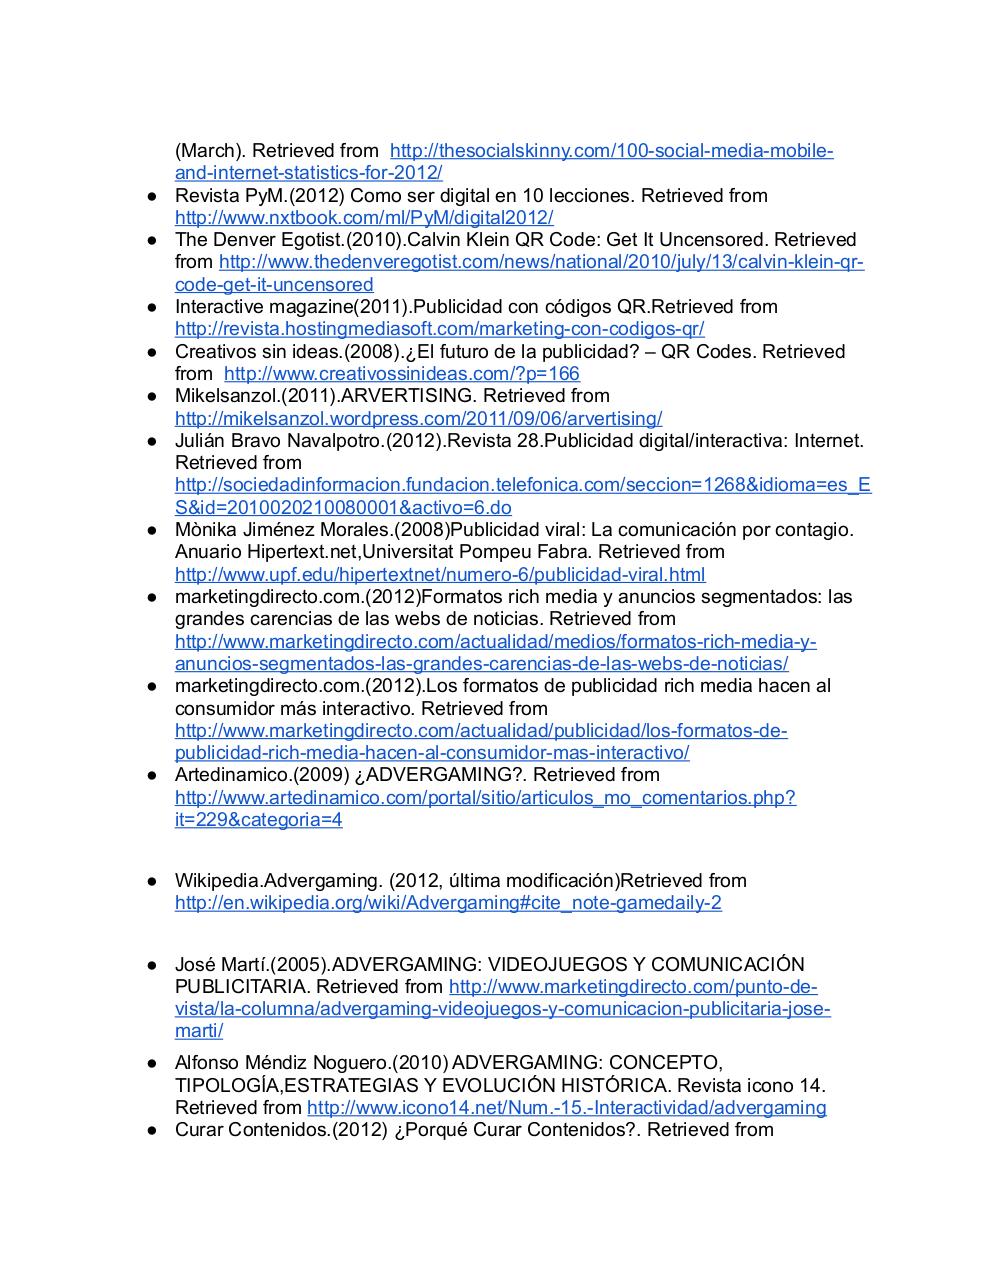 Vista previa del archivo PDF pubintfi.pdf